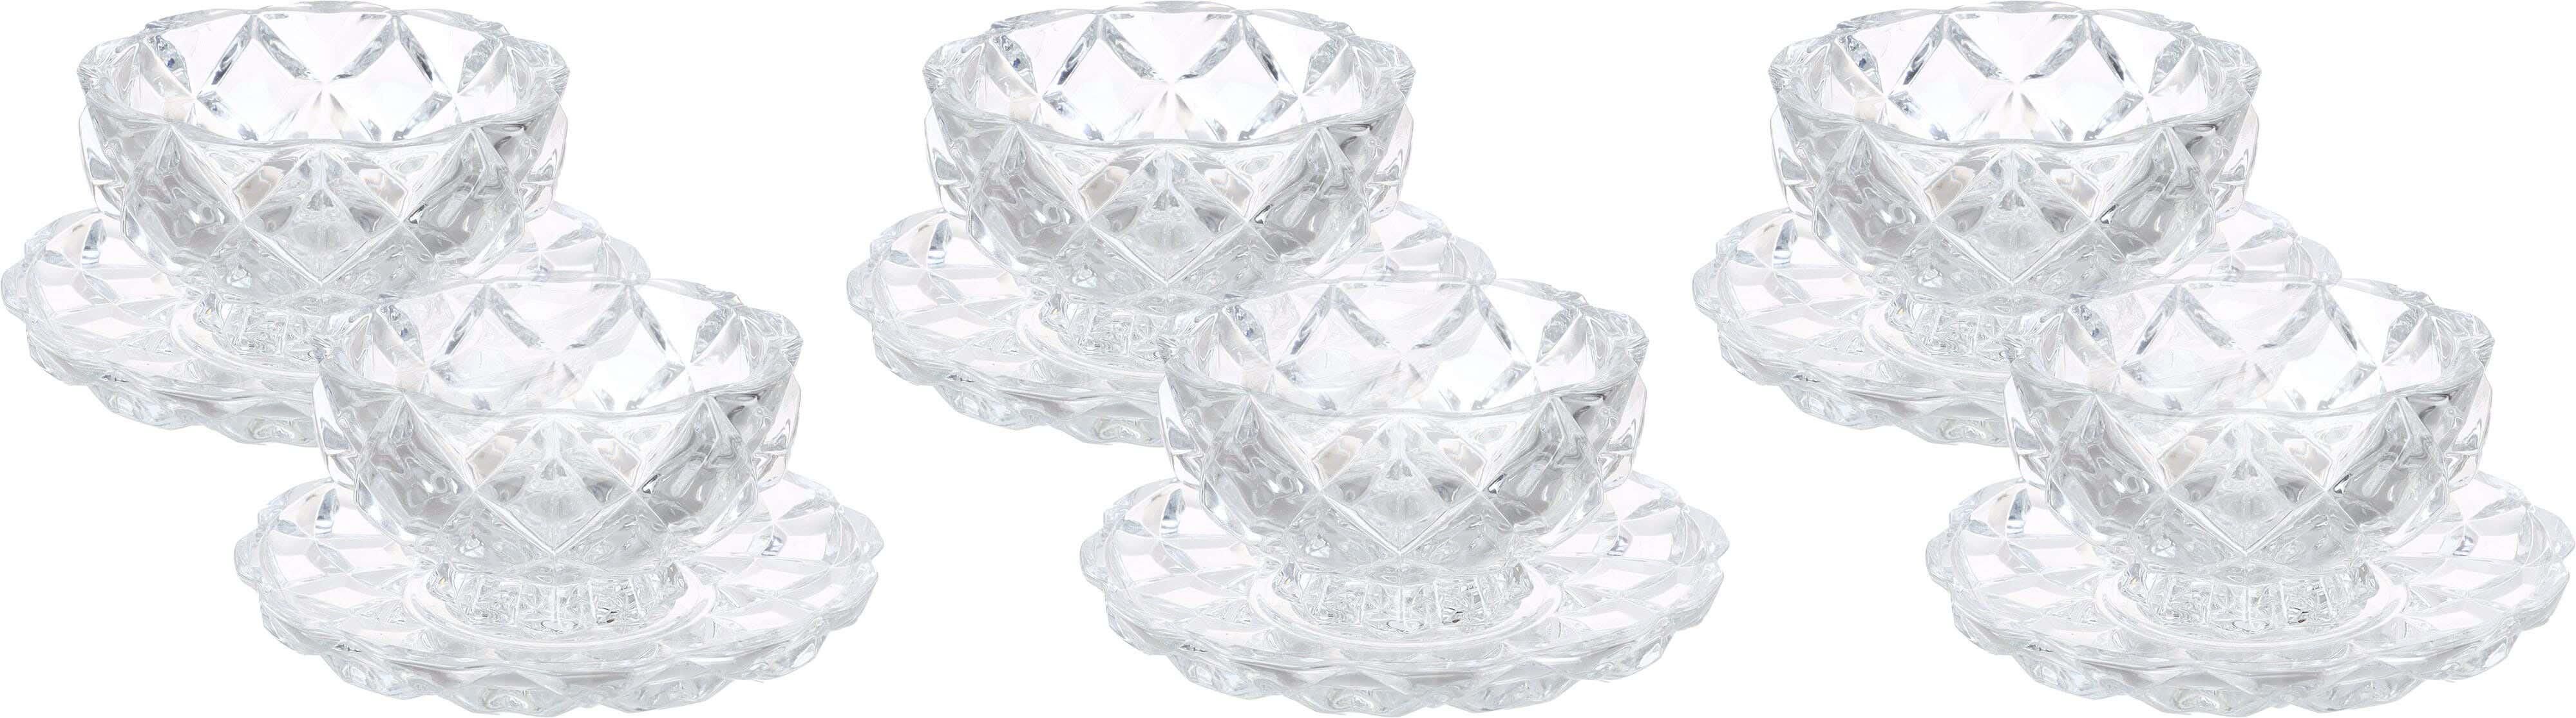 Get City Glass Dessert Bowls Set, 12 Pieces - Clear with best offers | Raneen.com